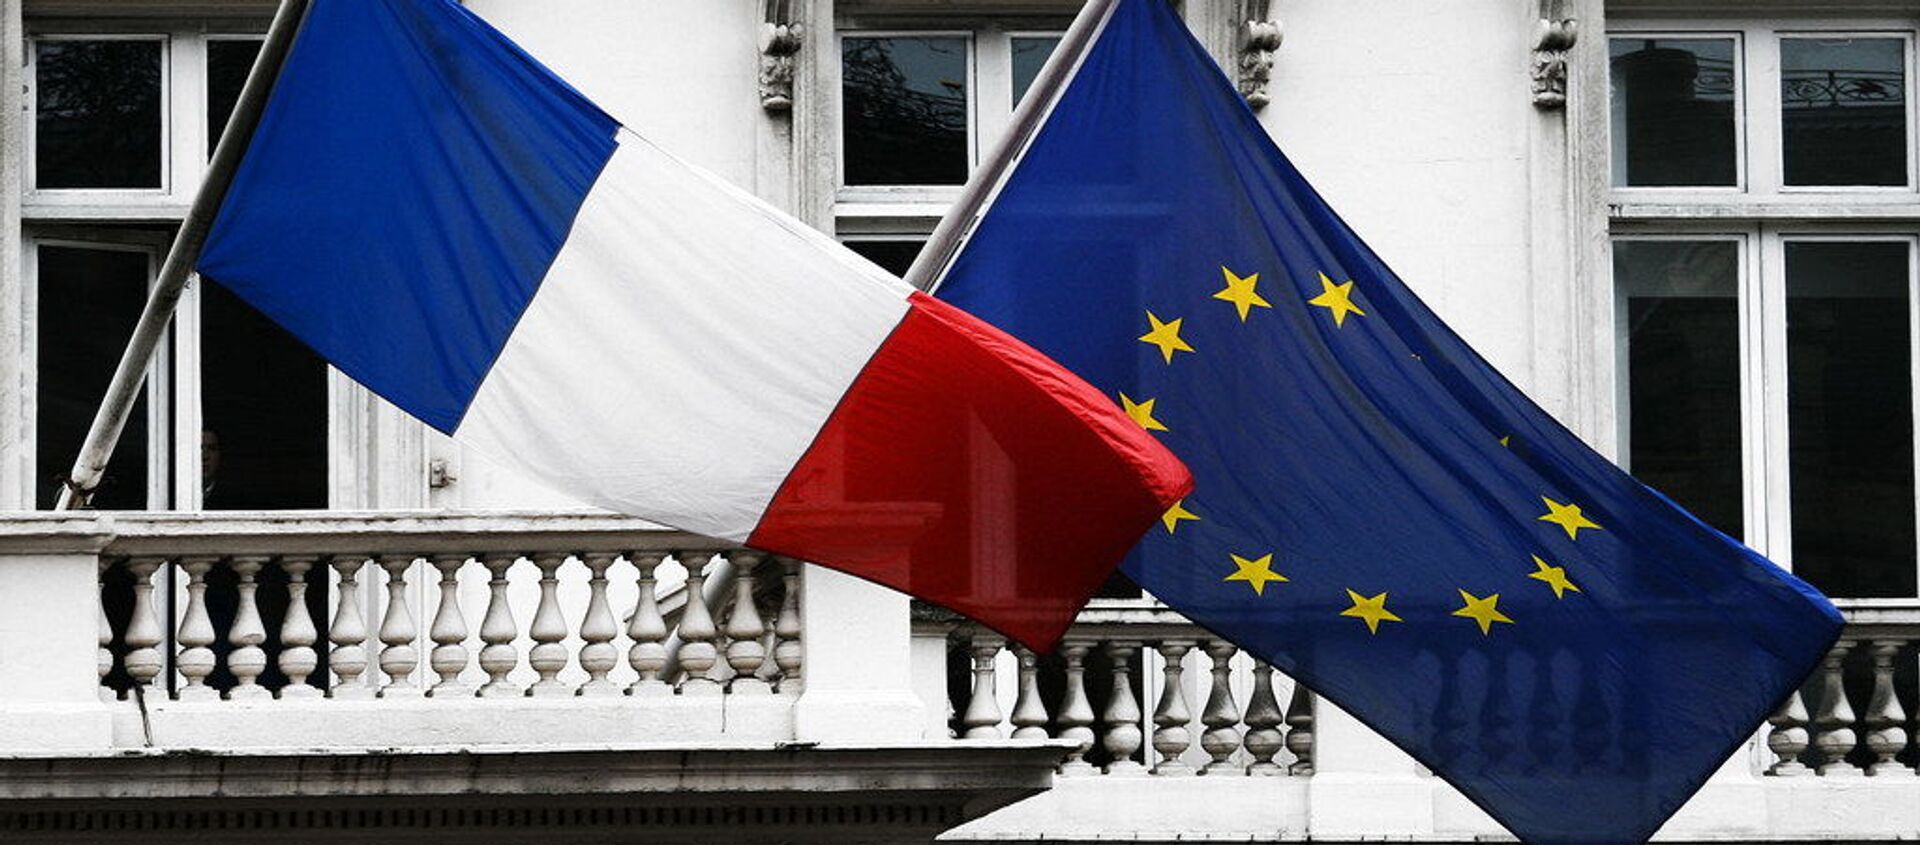 Flag of France and EU - Sputnik International, 1920, 17.04.2021